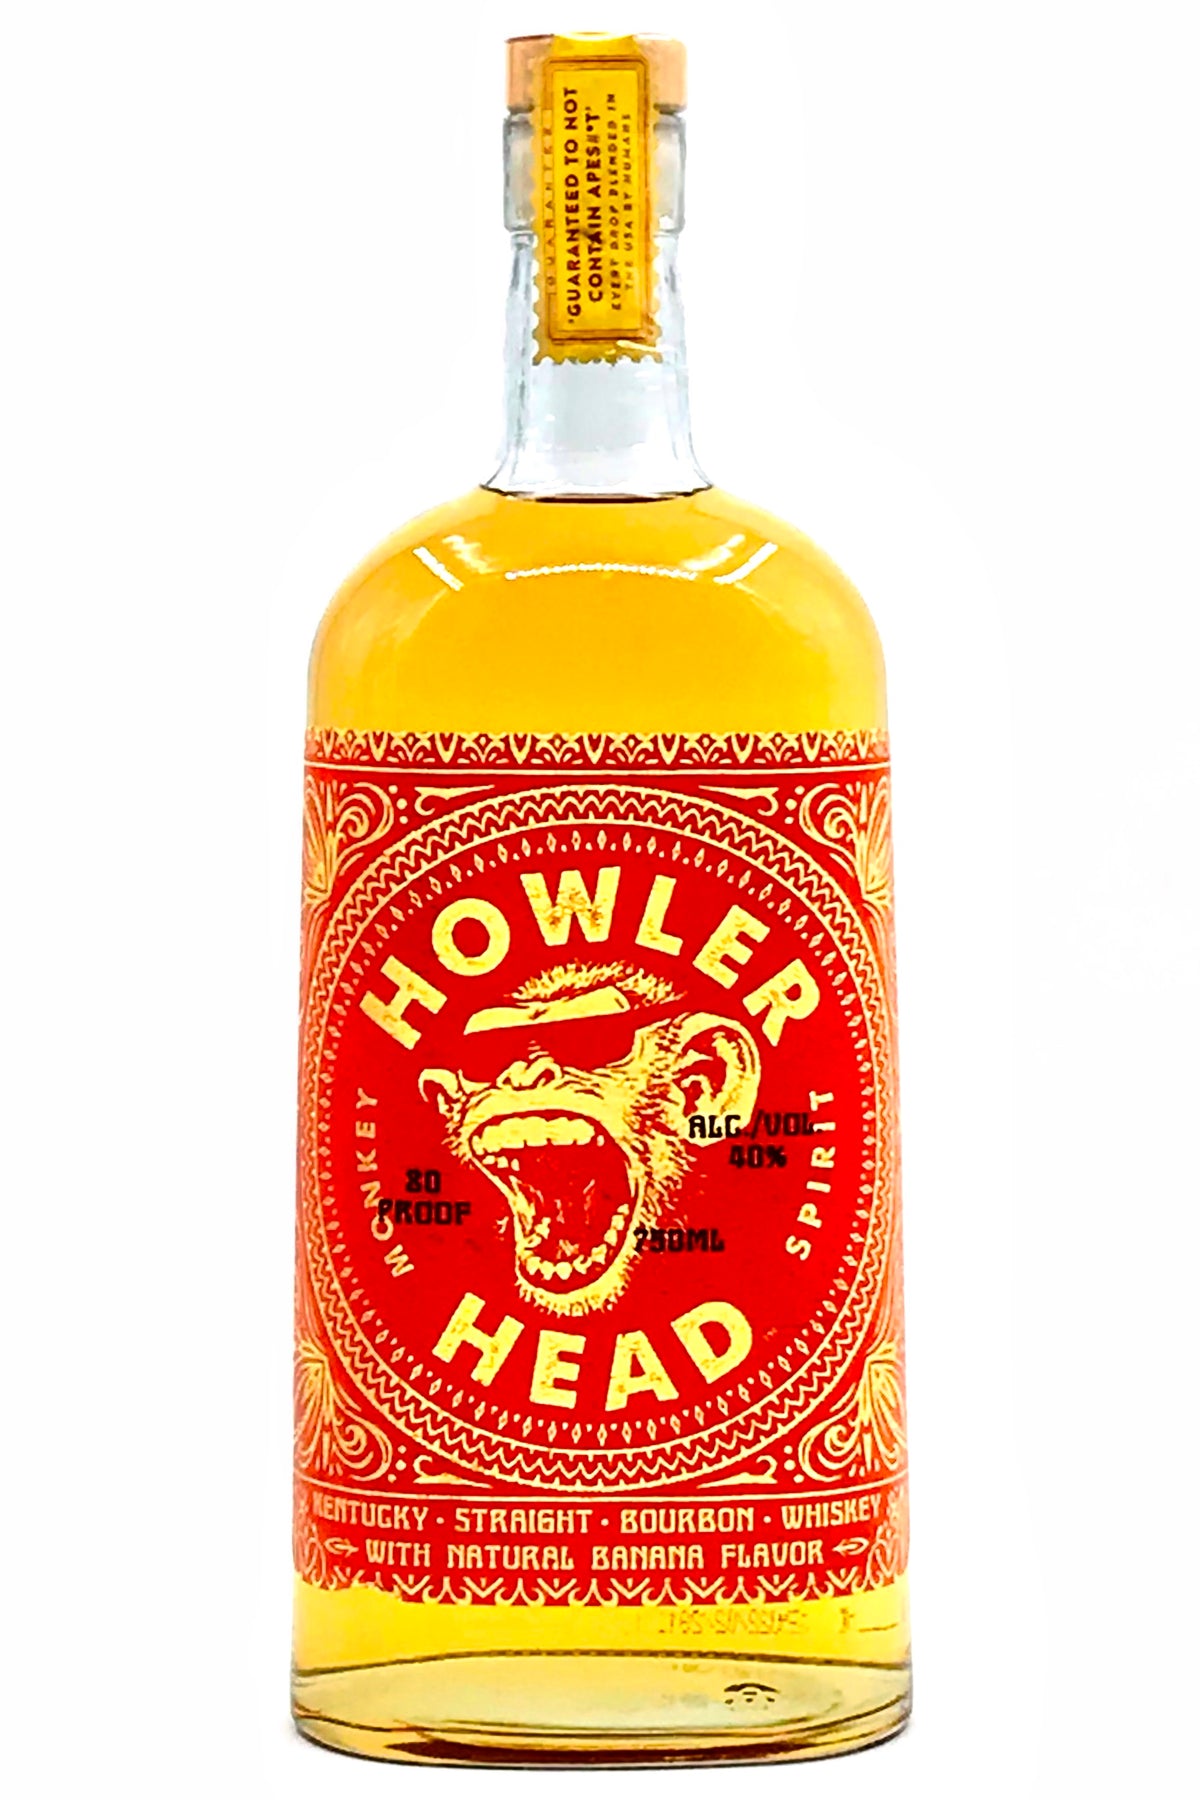 Howler Head Banana-Infused Bourbon Whiskey